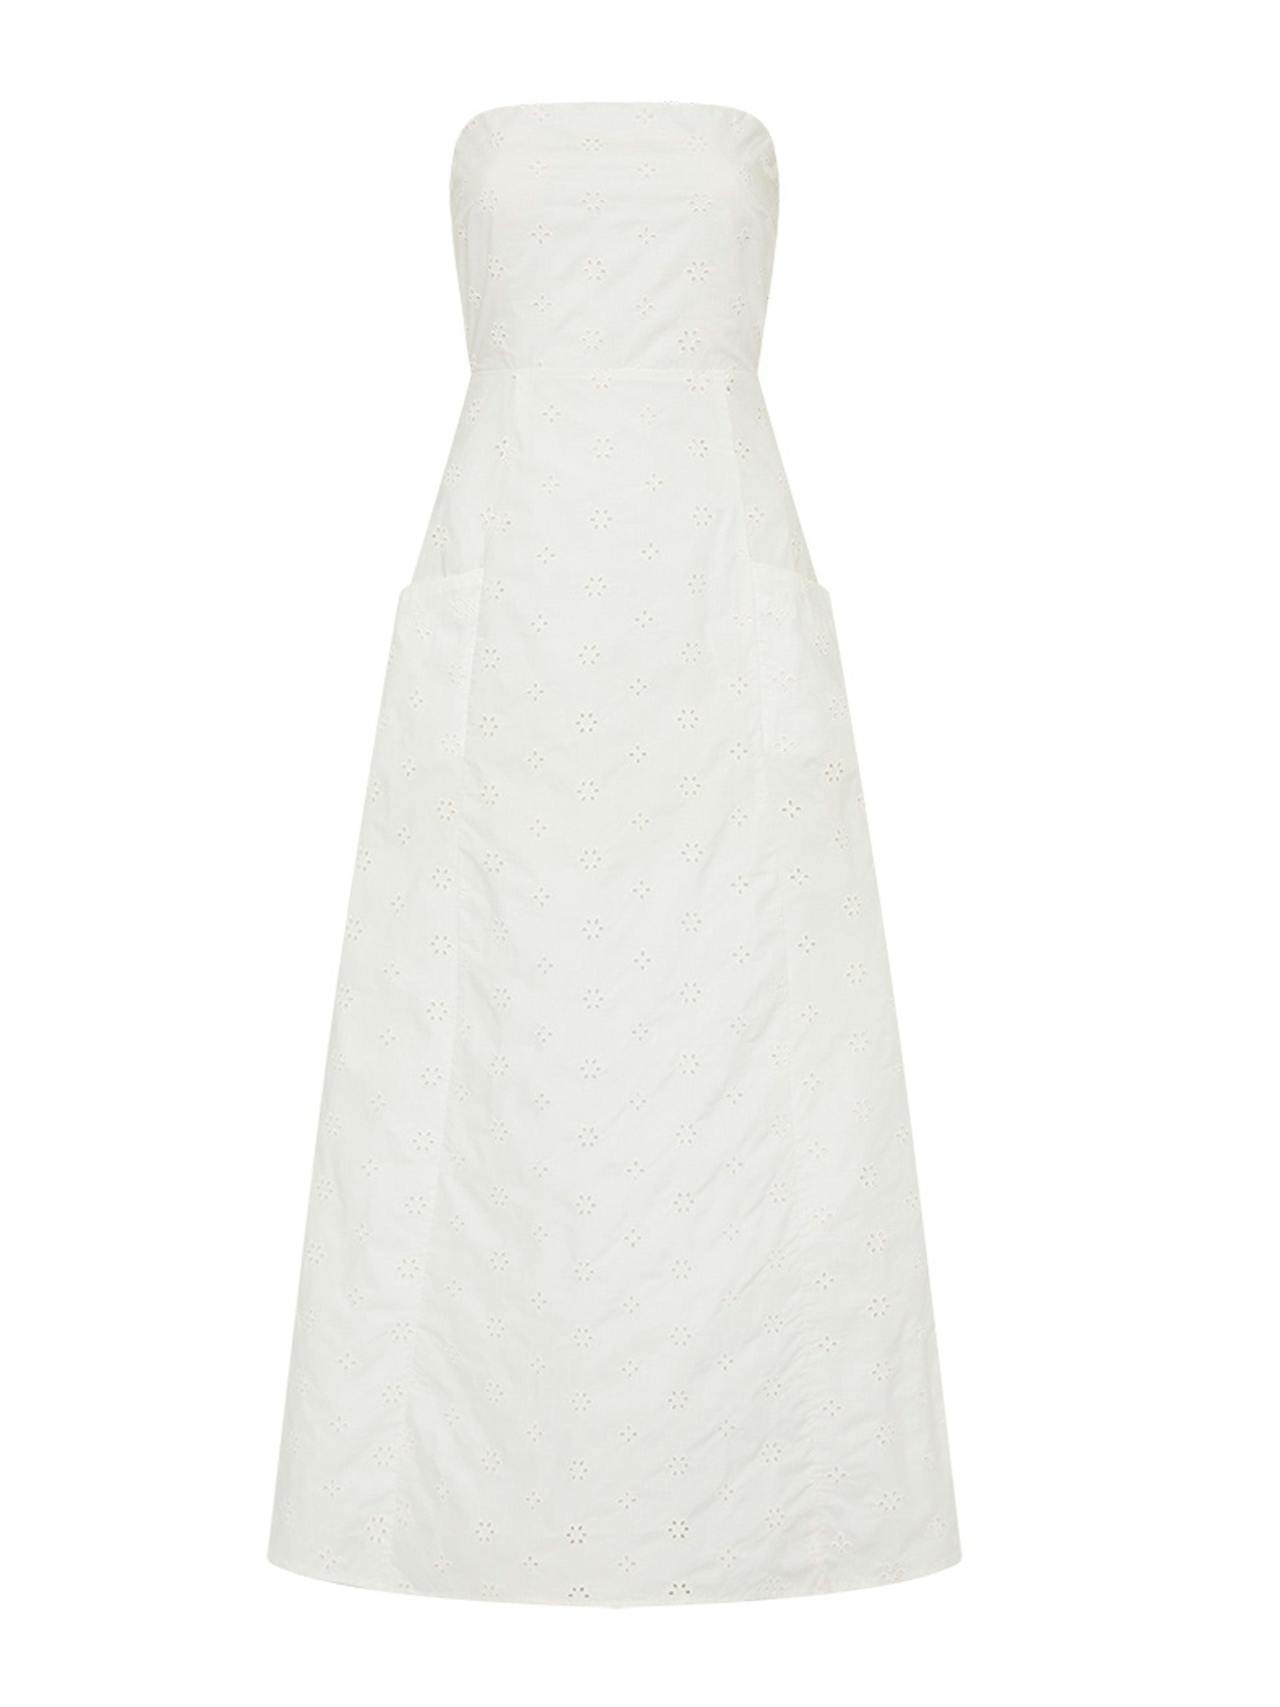 White floral broderie strapless dress